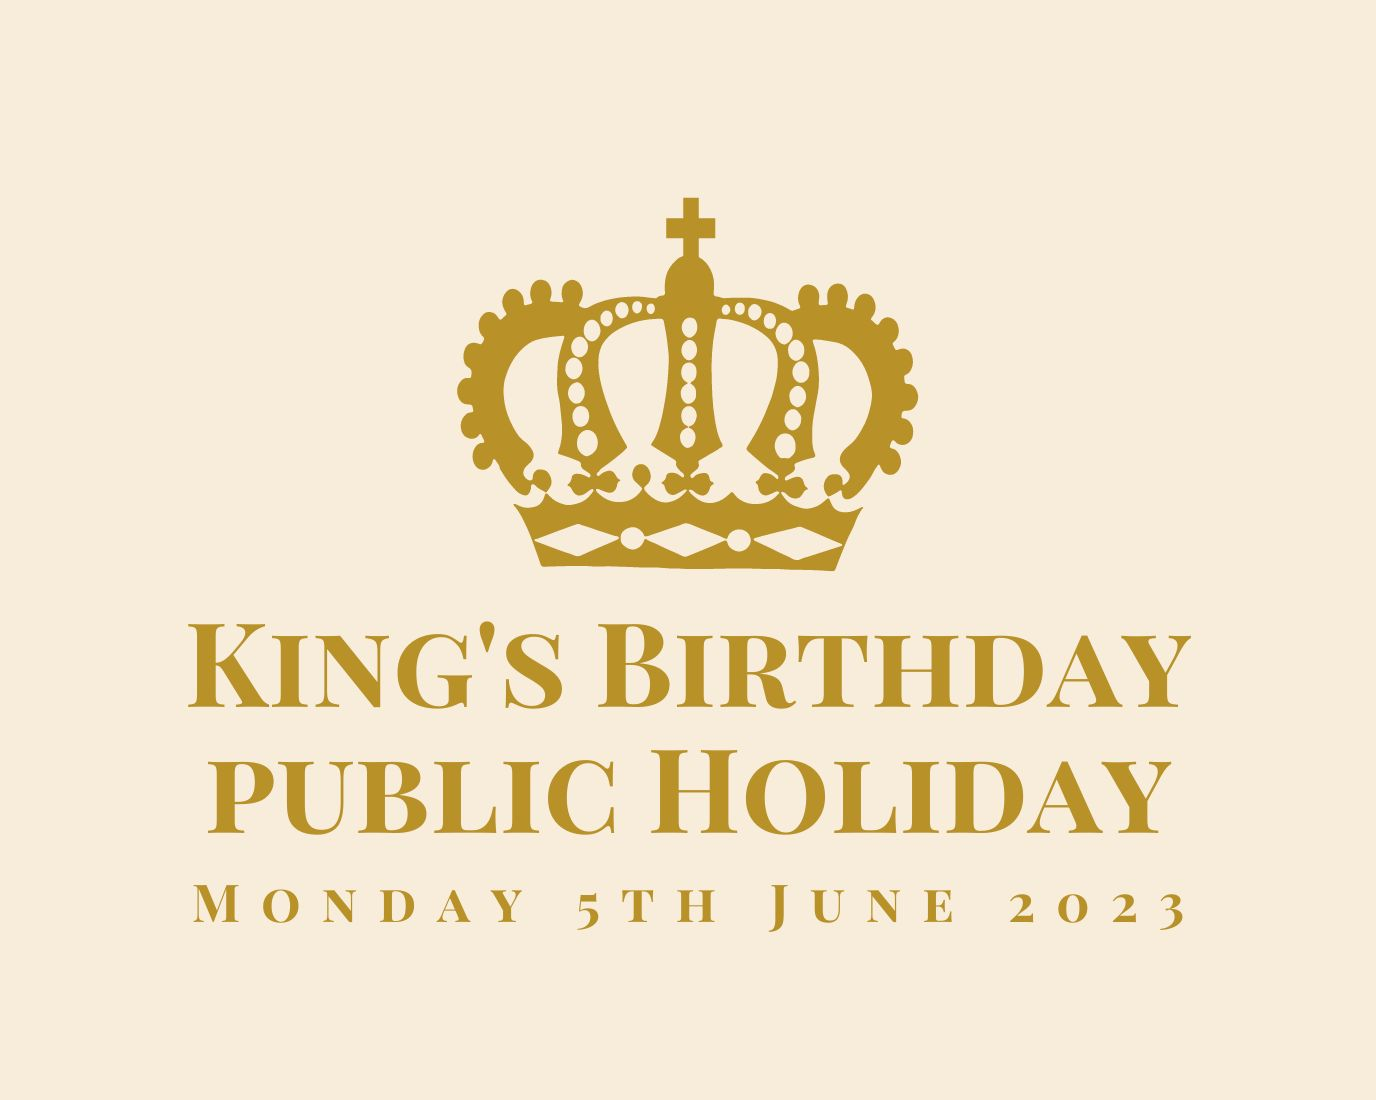 King's Birthday